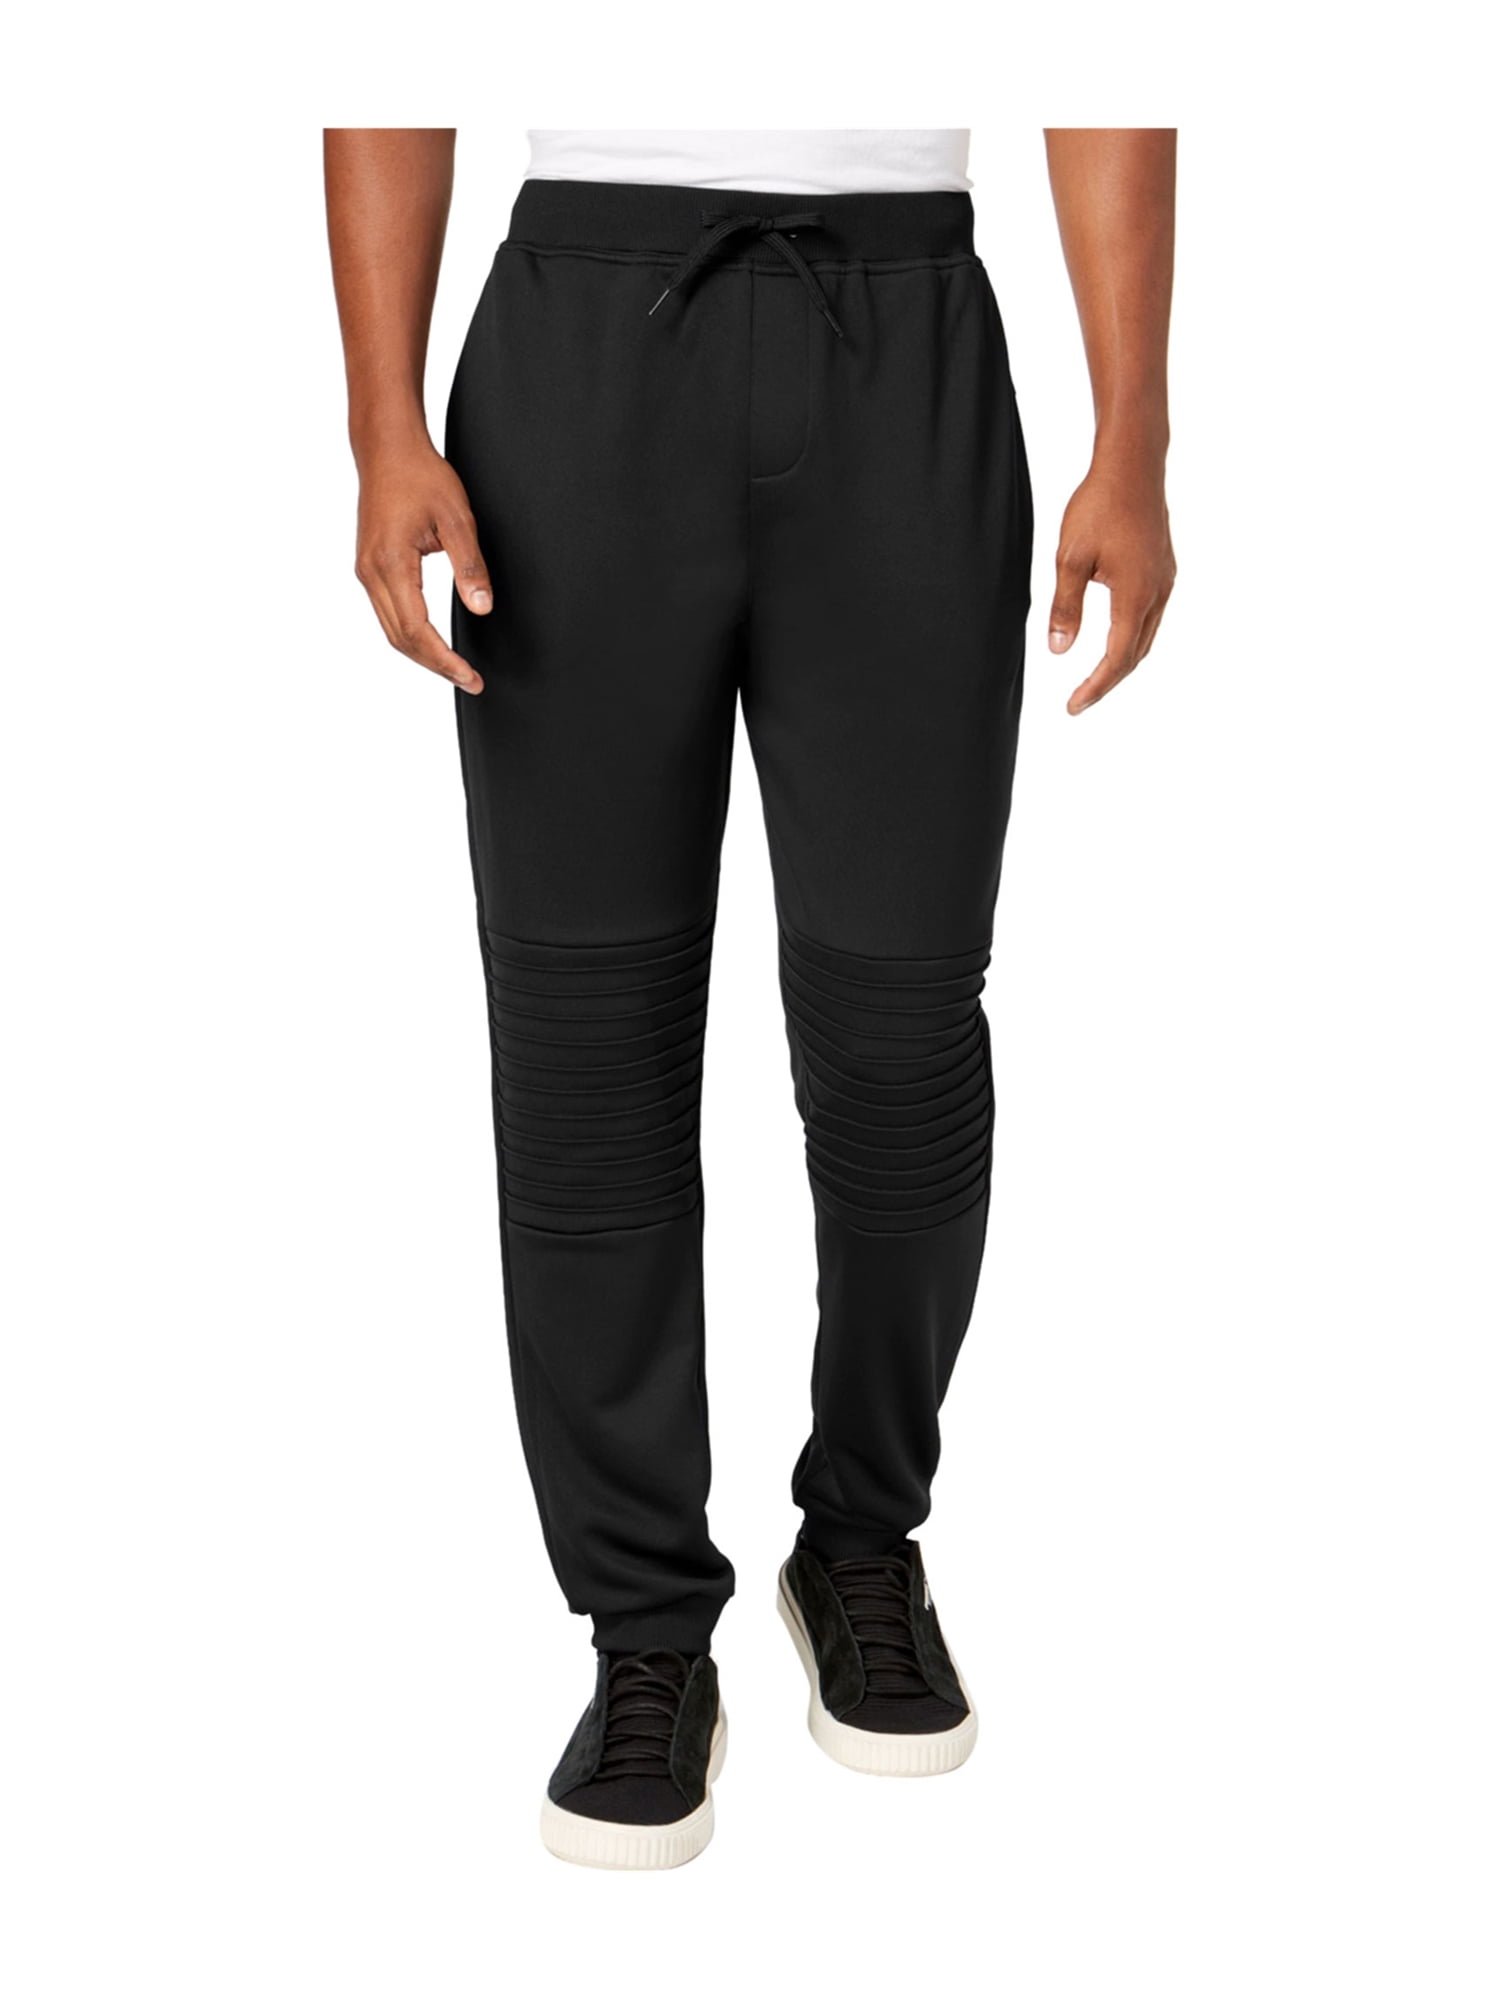 Ideology Mens Moto Athletic Jogger Pants black 3XL/30 | Walmart Canada